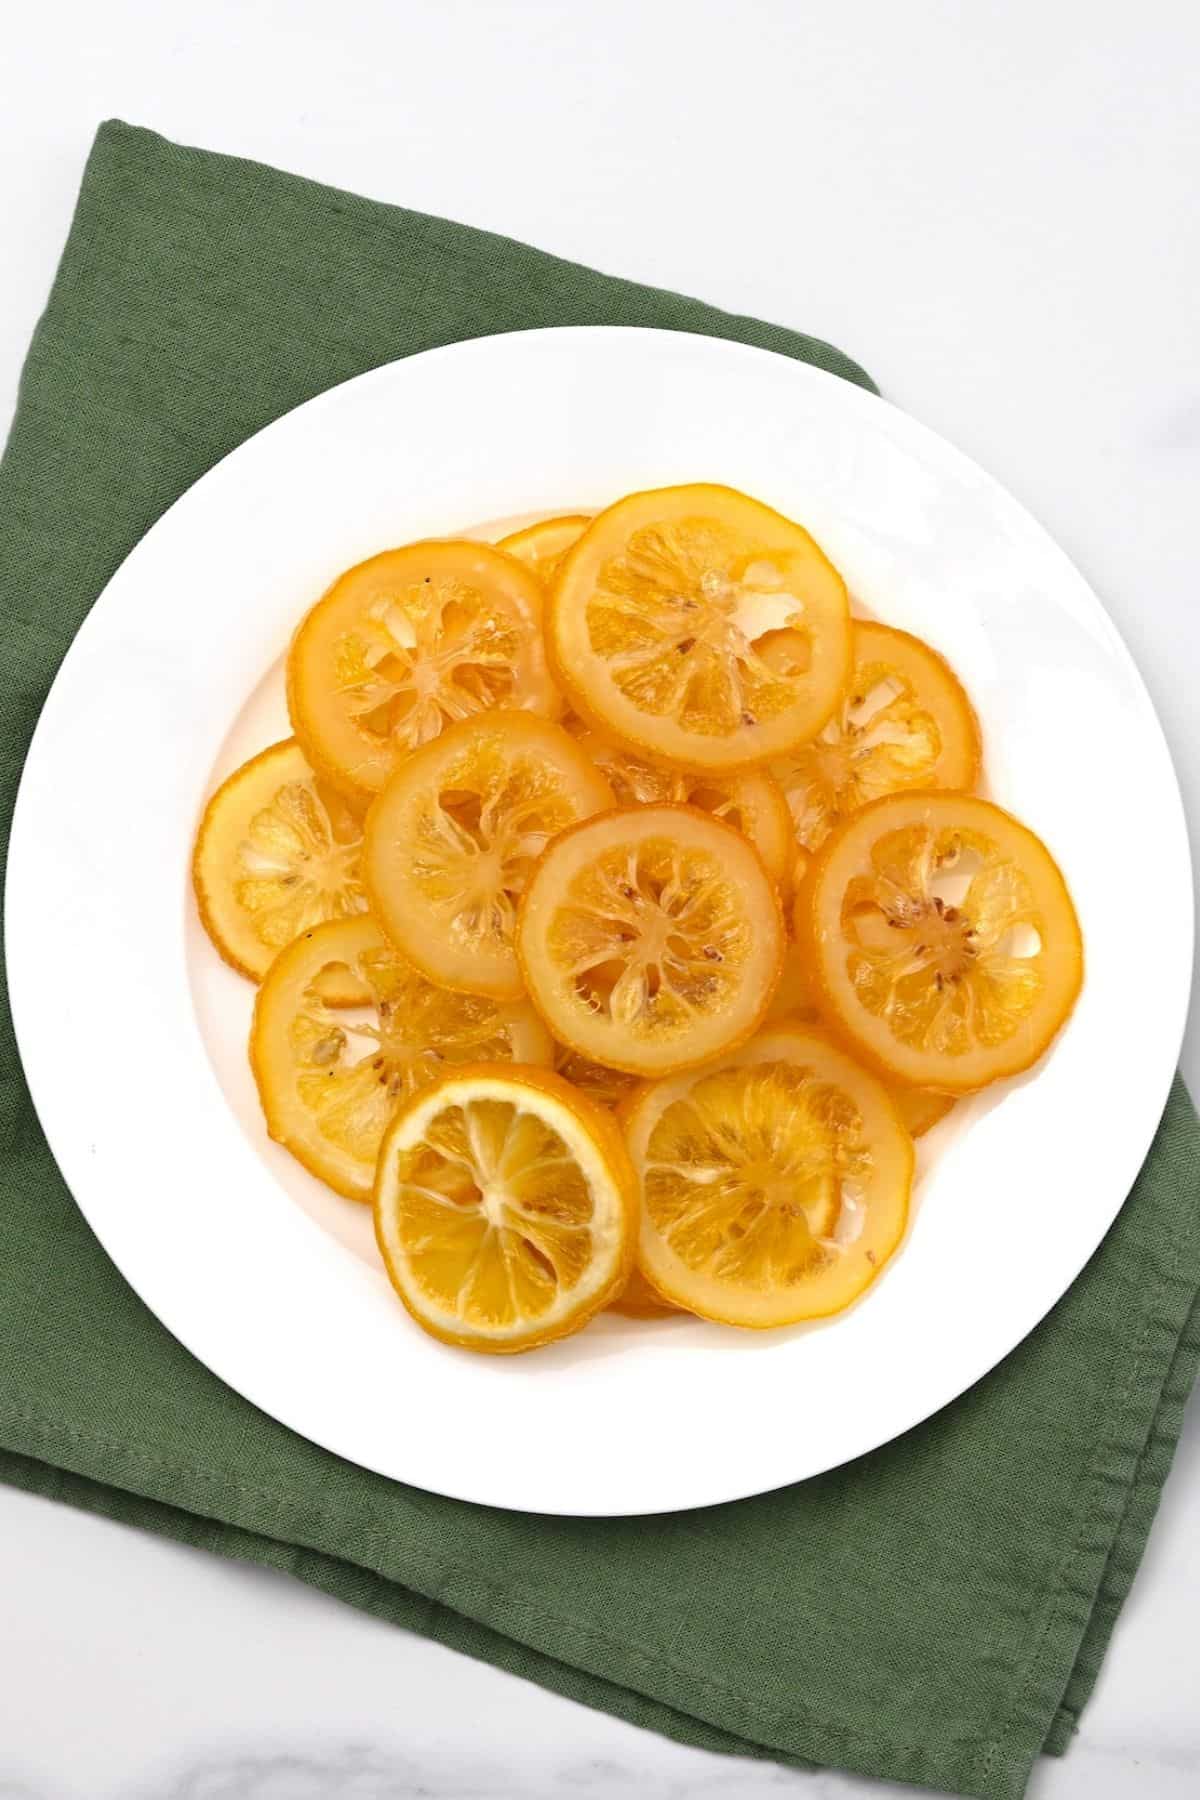 Candied Lemon Slices - Savor the Best